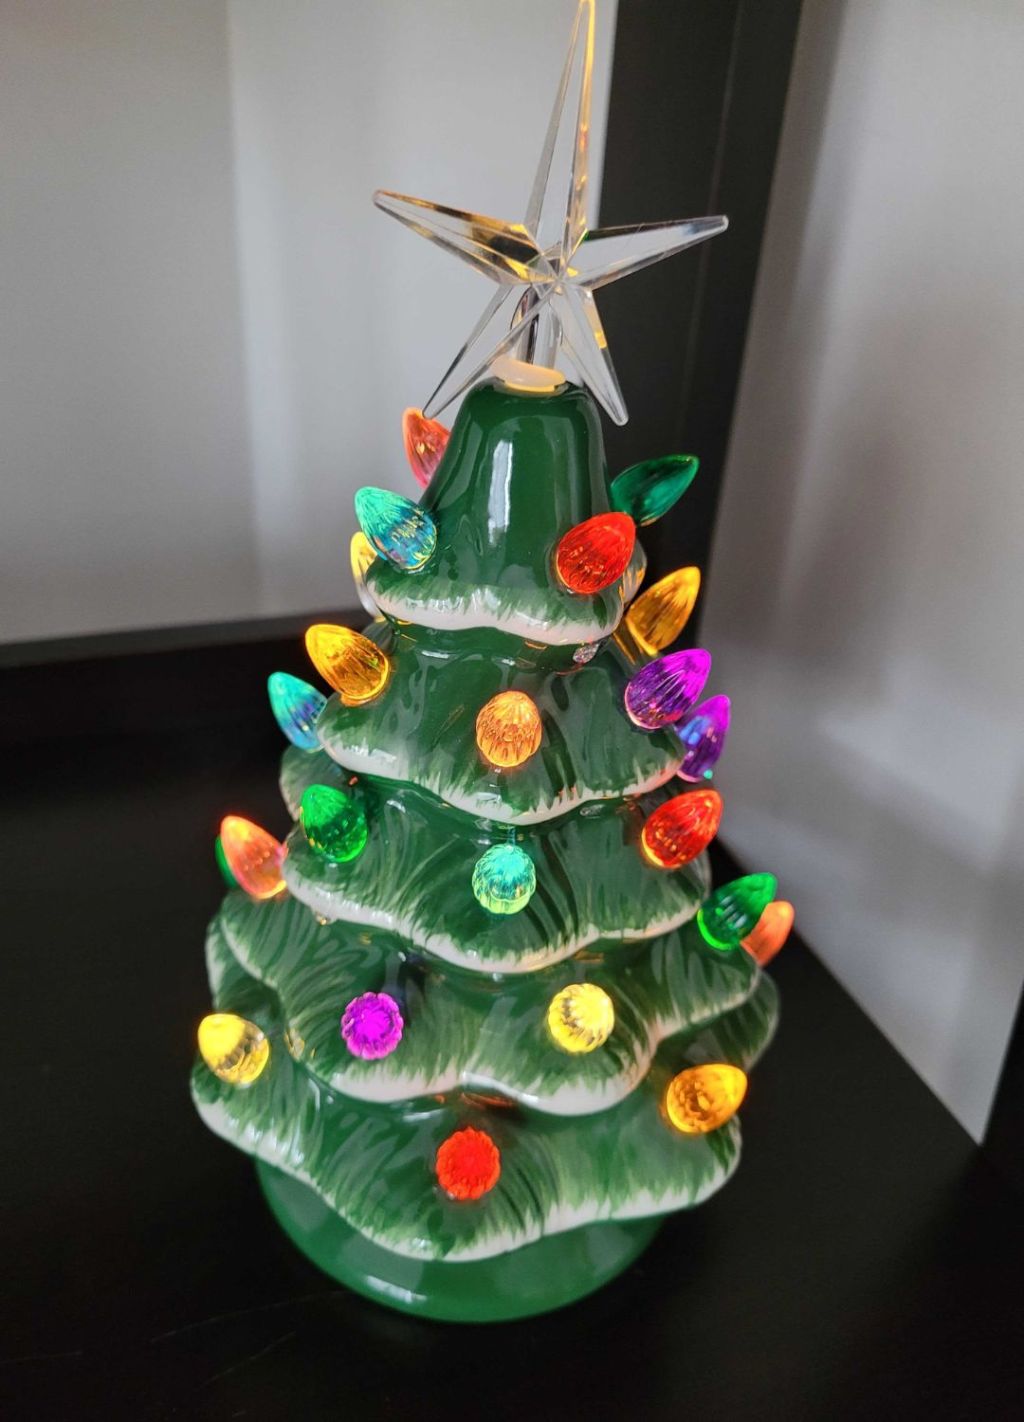 LED Lighted Ceramic Christmas Tree from Dollar Tree